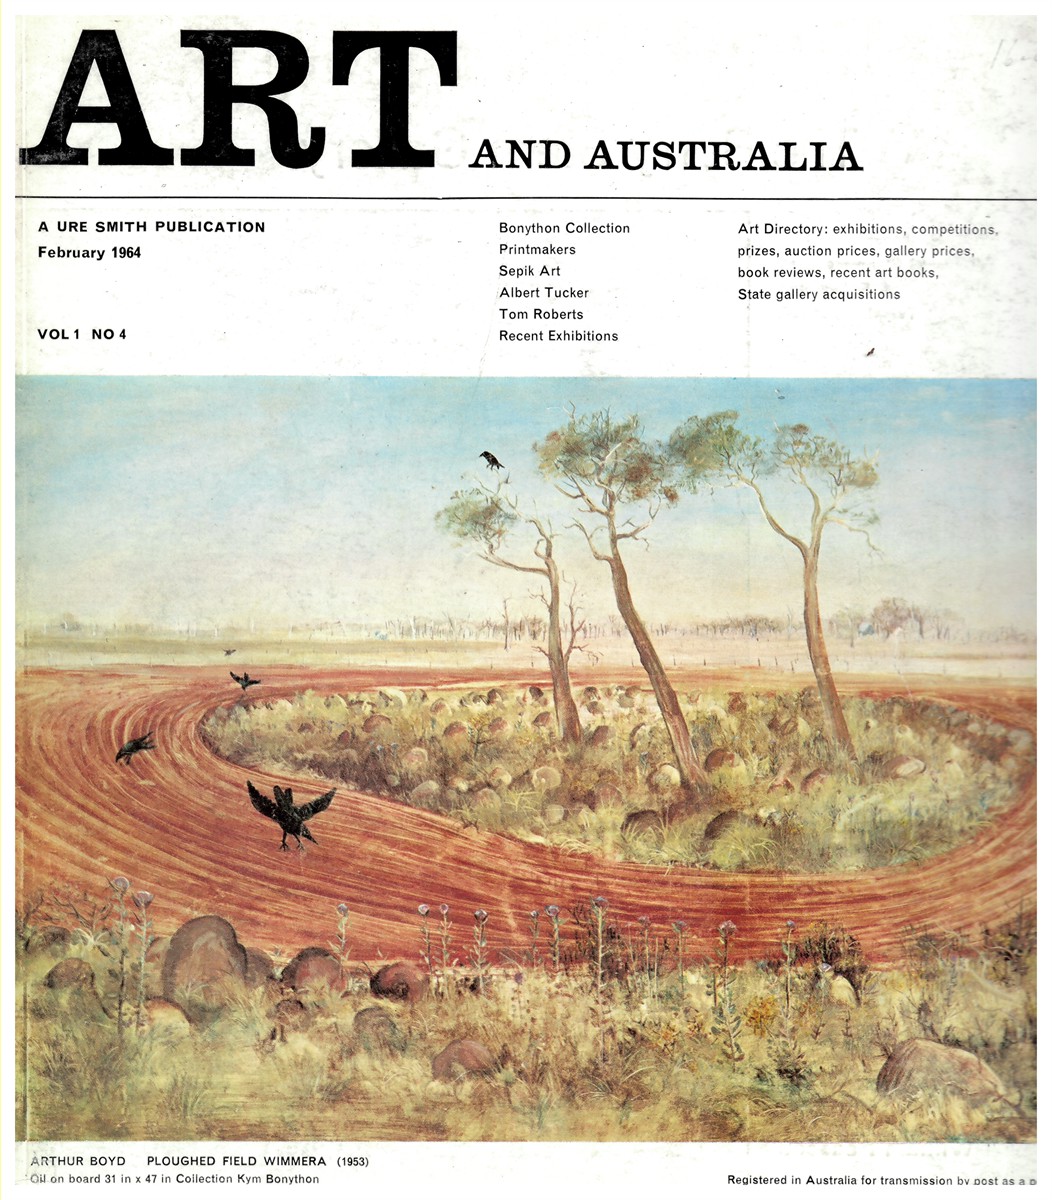 HORTON, MERVYN (EDITOR) - Art and Australia. Vol. 1 No. 4 February 1964